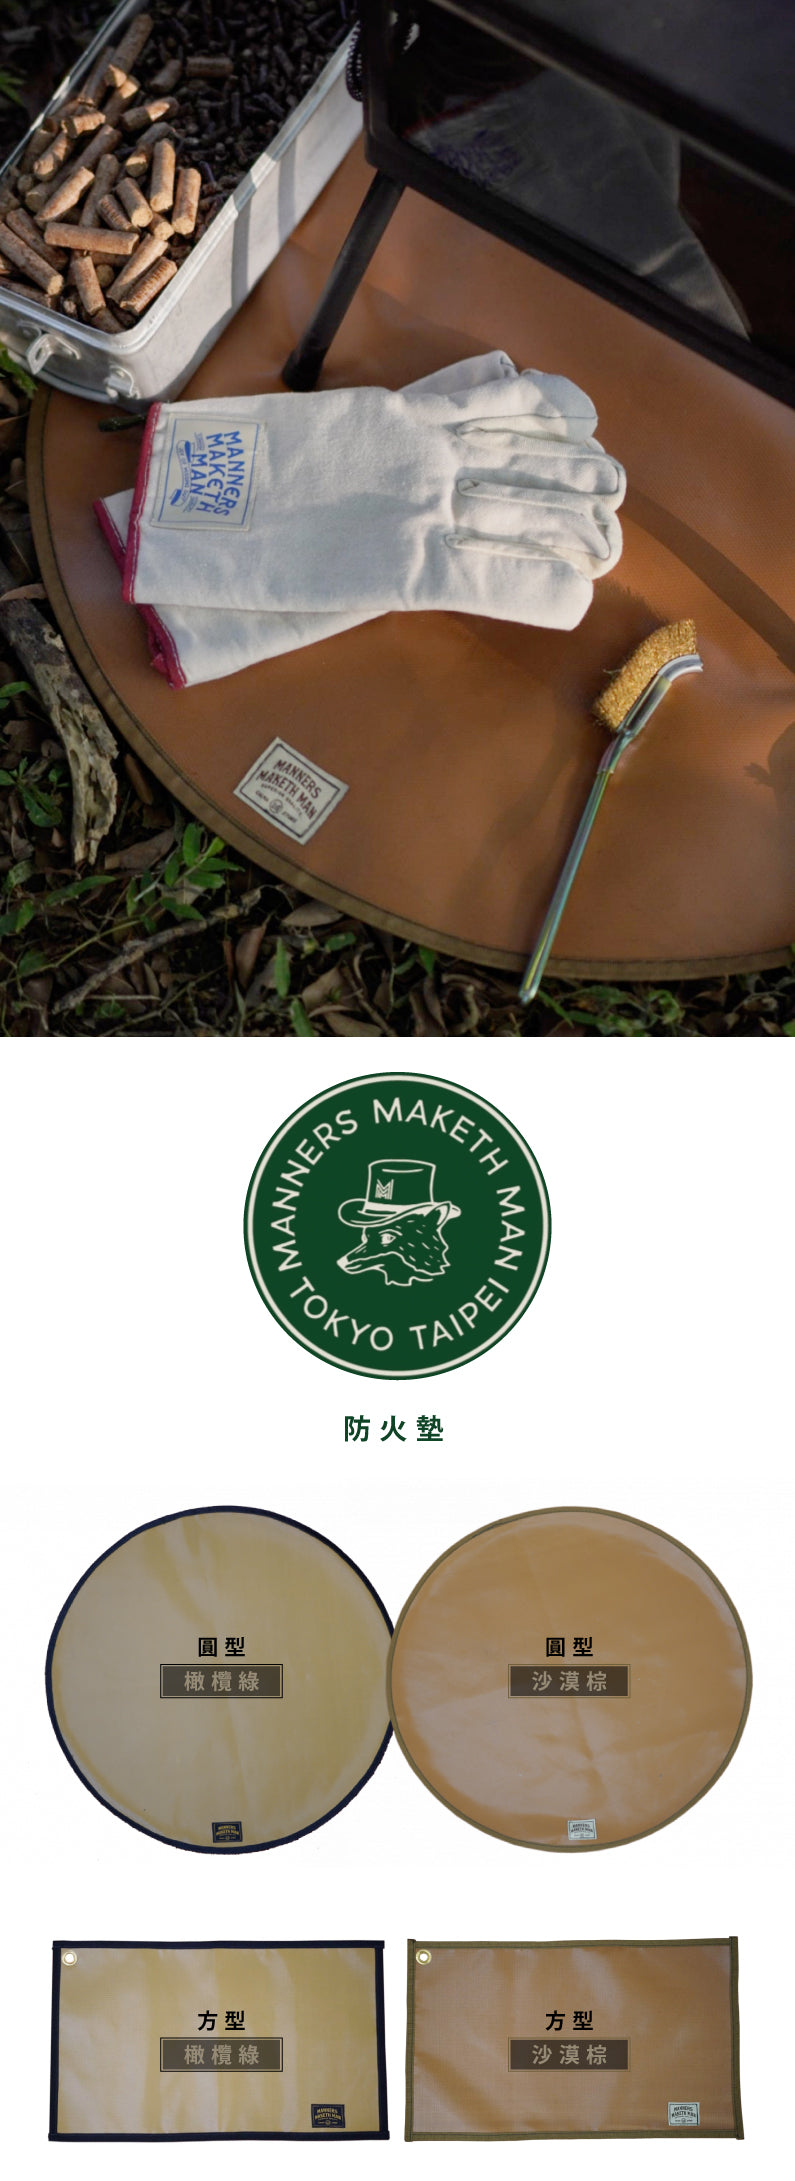 Manners Maketh Man • 風格防火墊 圓型/方型❷款 x 橄欖綠/沙漠棕❷色